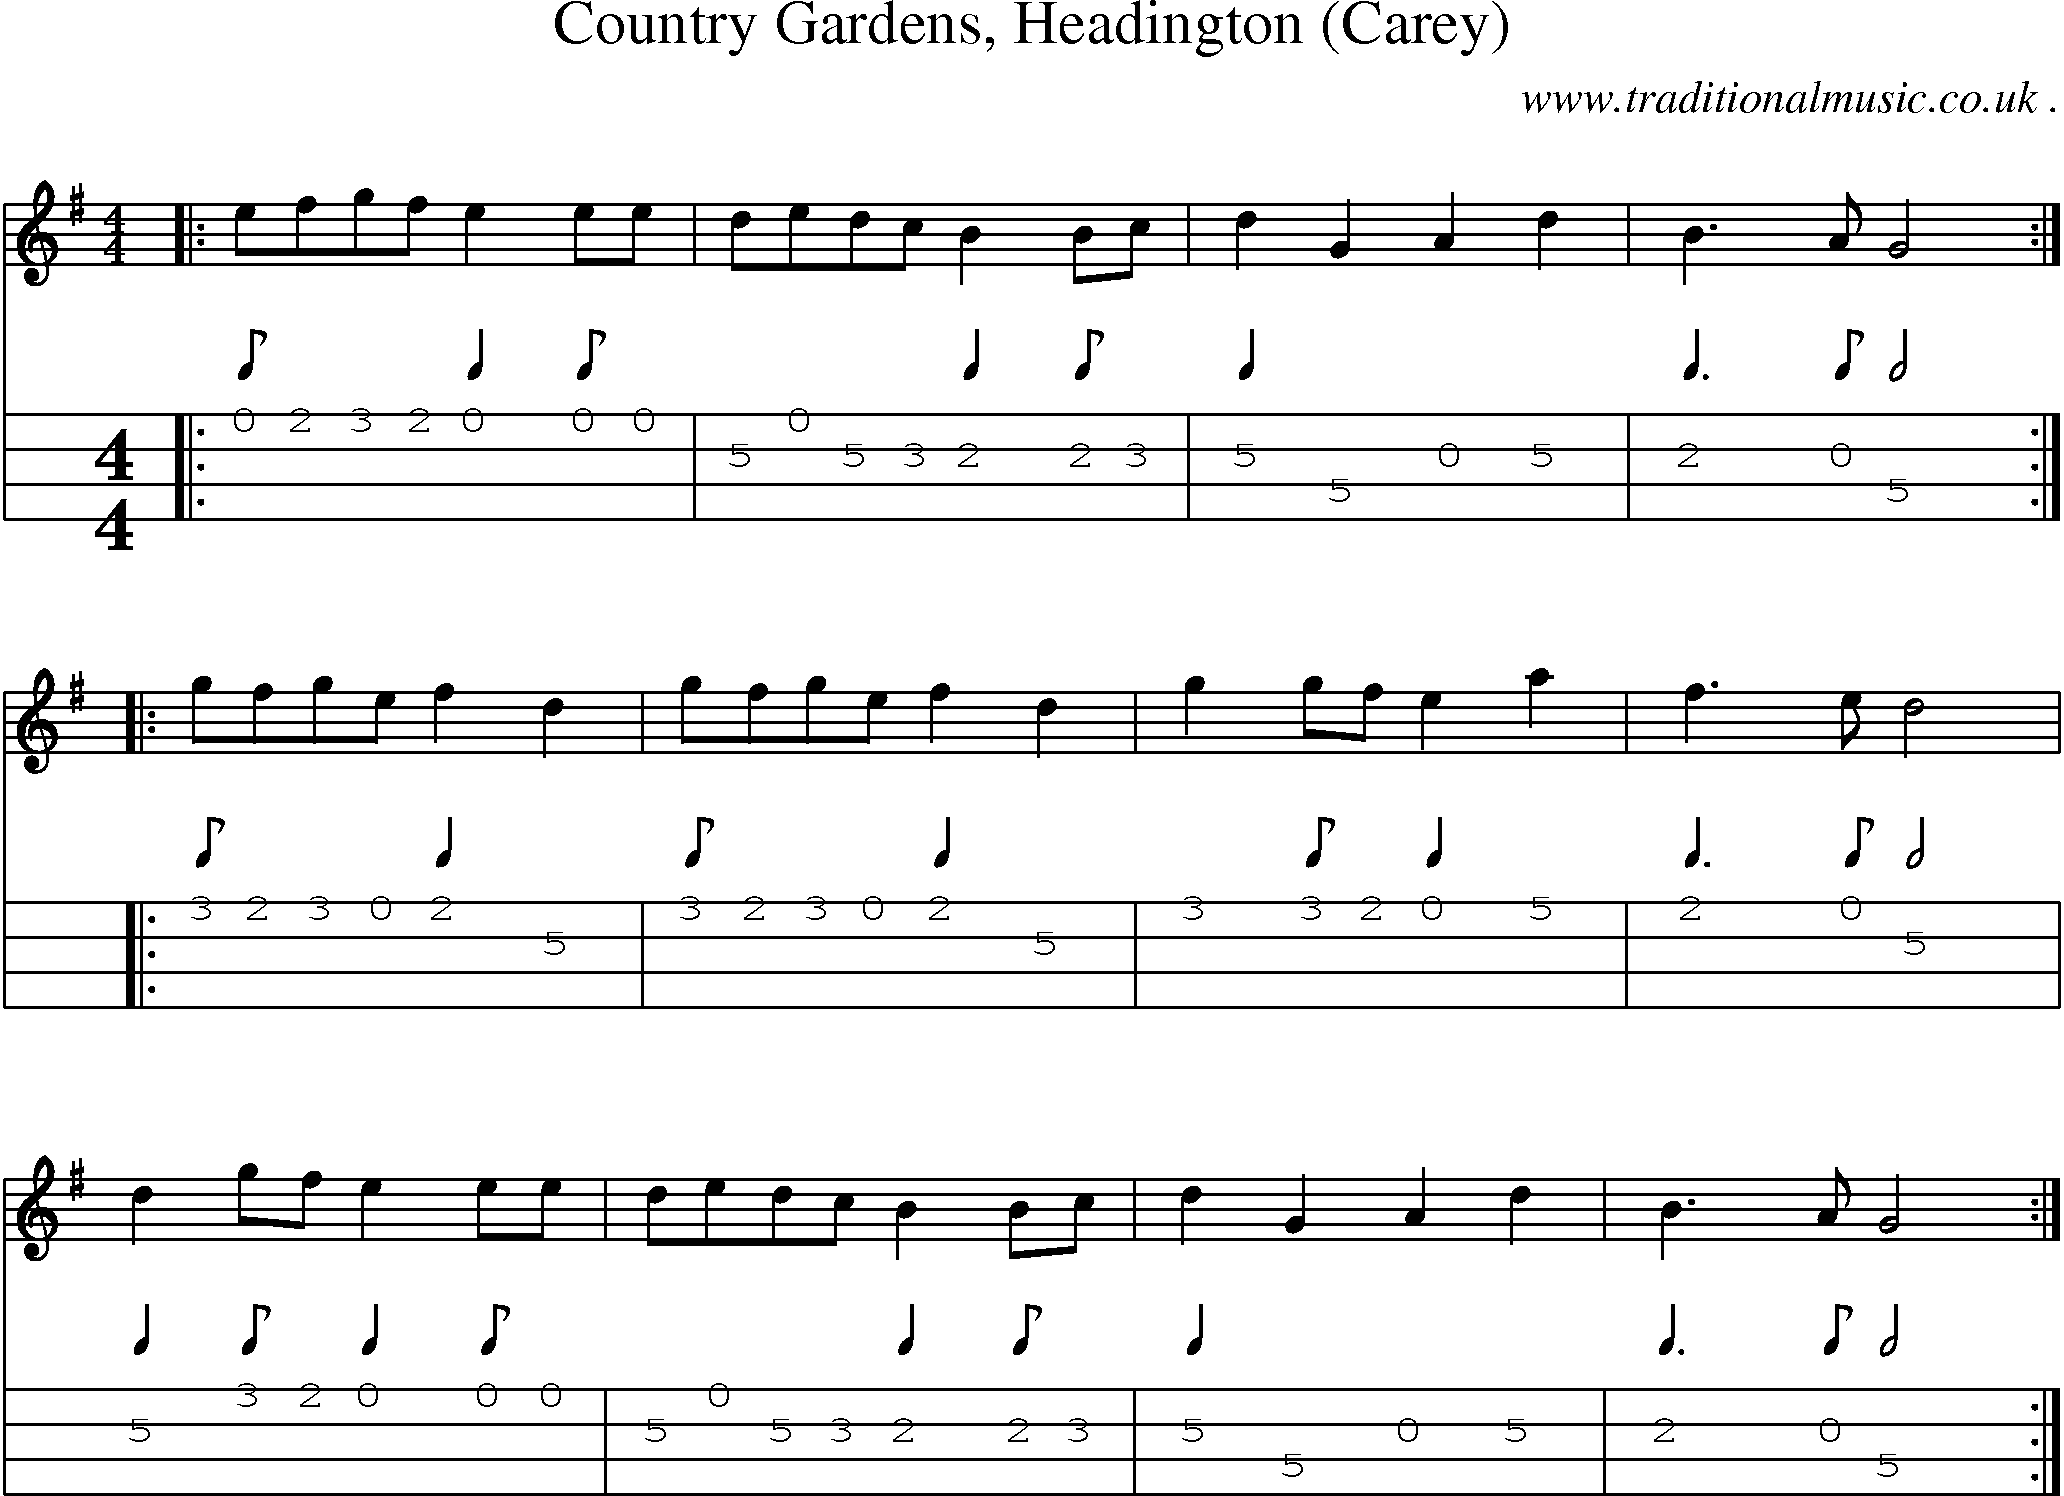 Sheet-Music and Mandolin Tabs for Country Gardens Headington (carey)